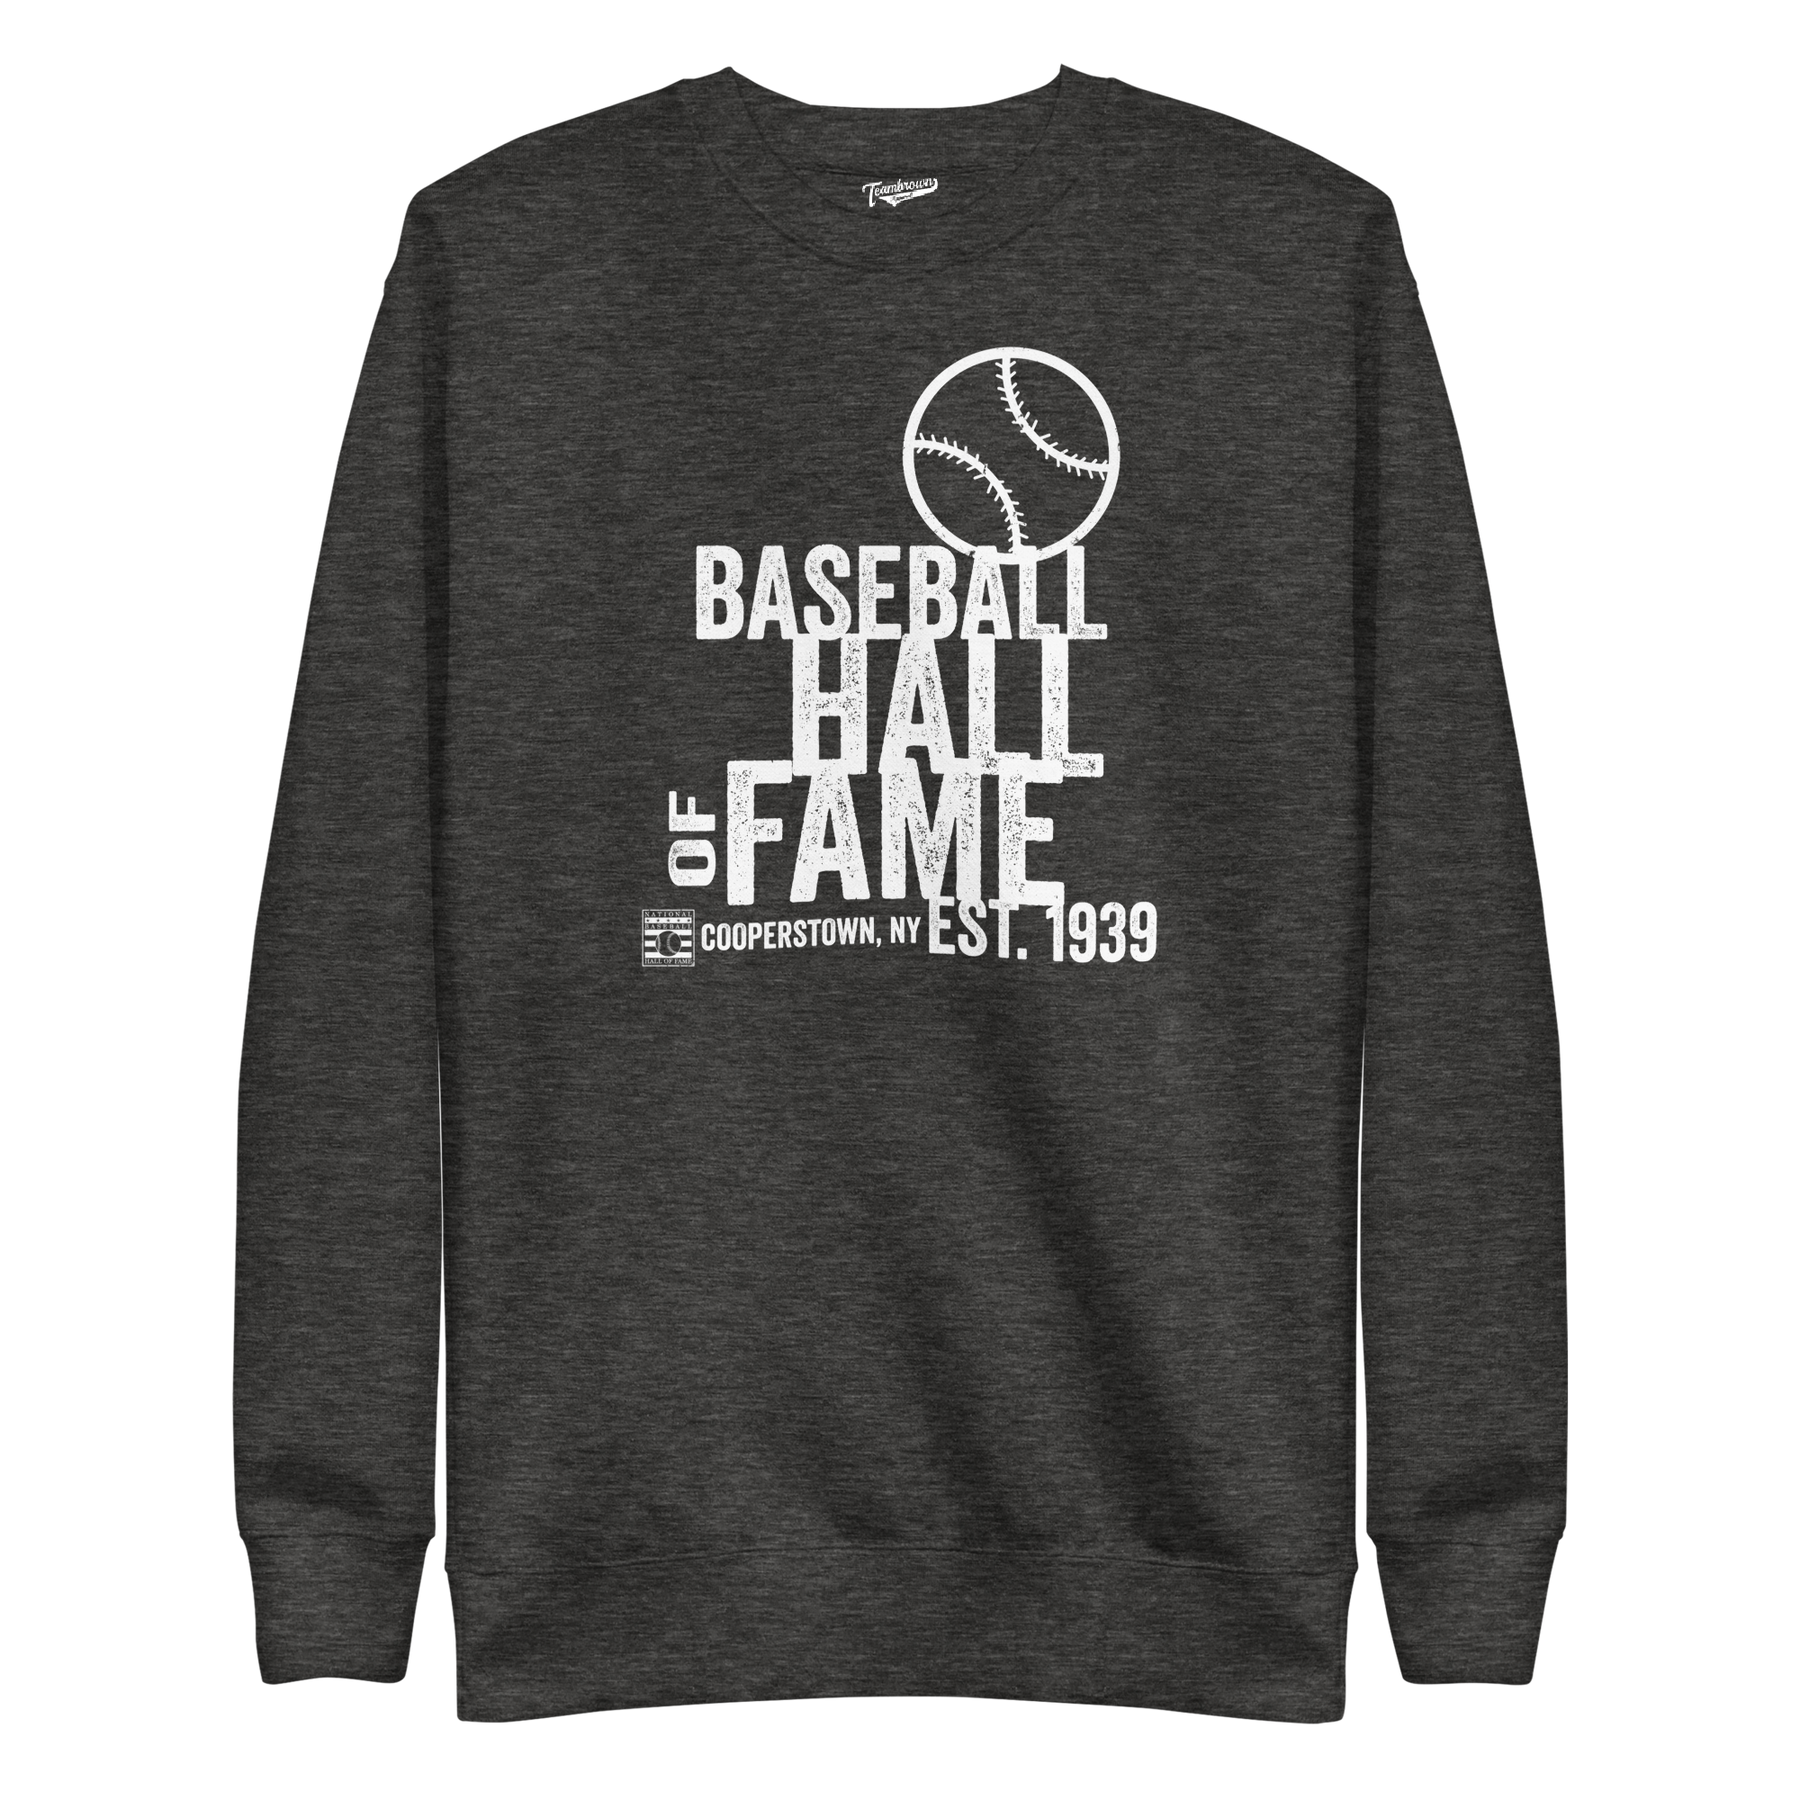 Baseball Hall of Fame - Retro - Crewneck Sweatshirt